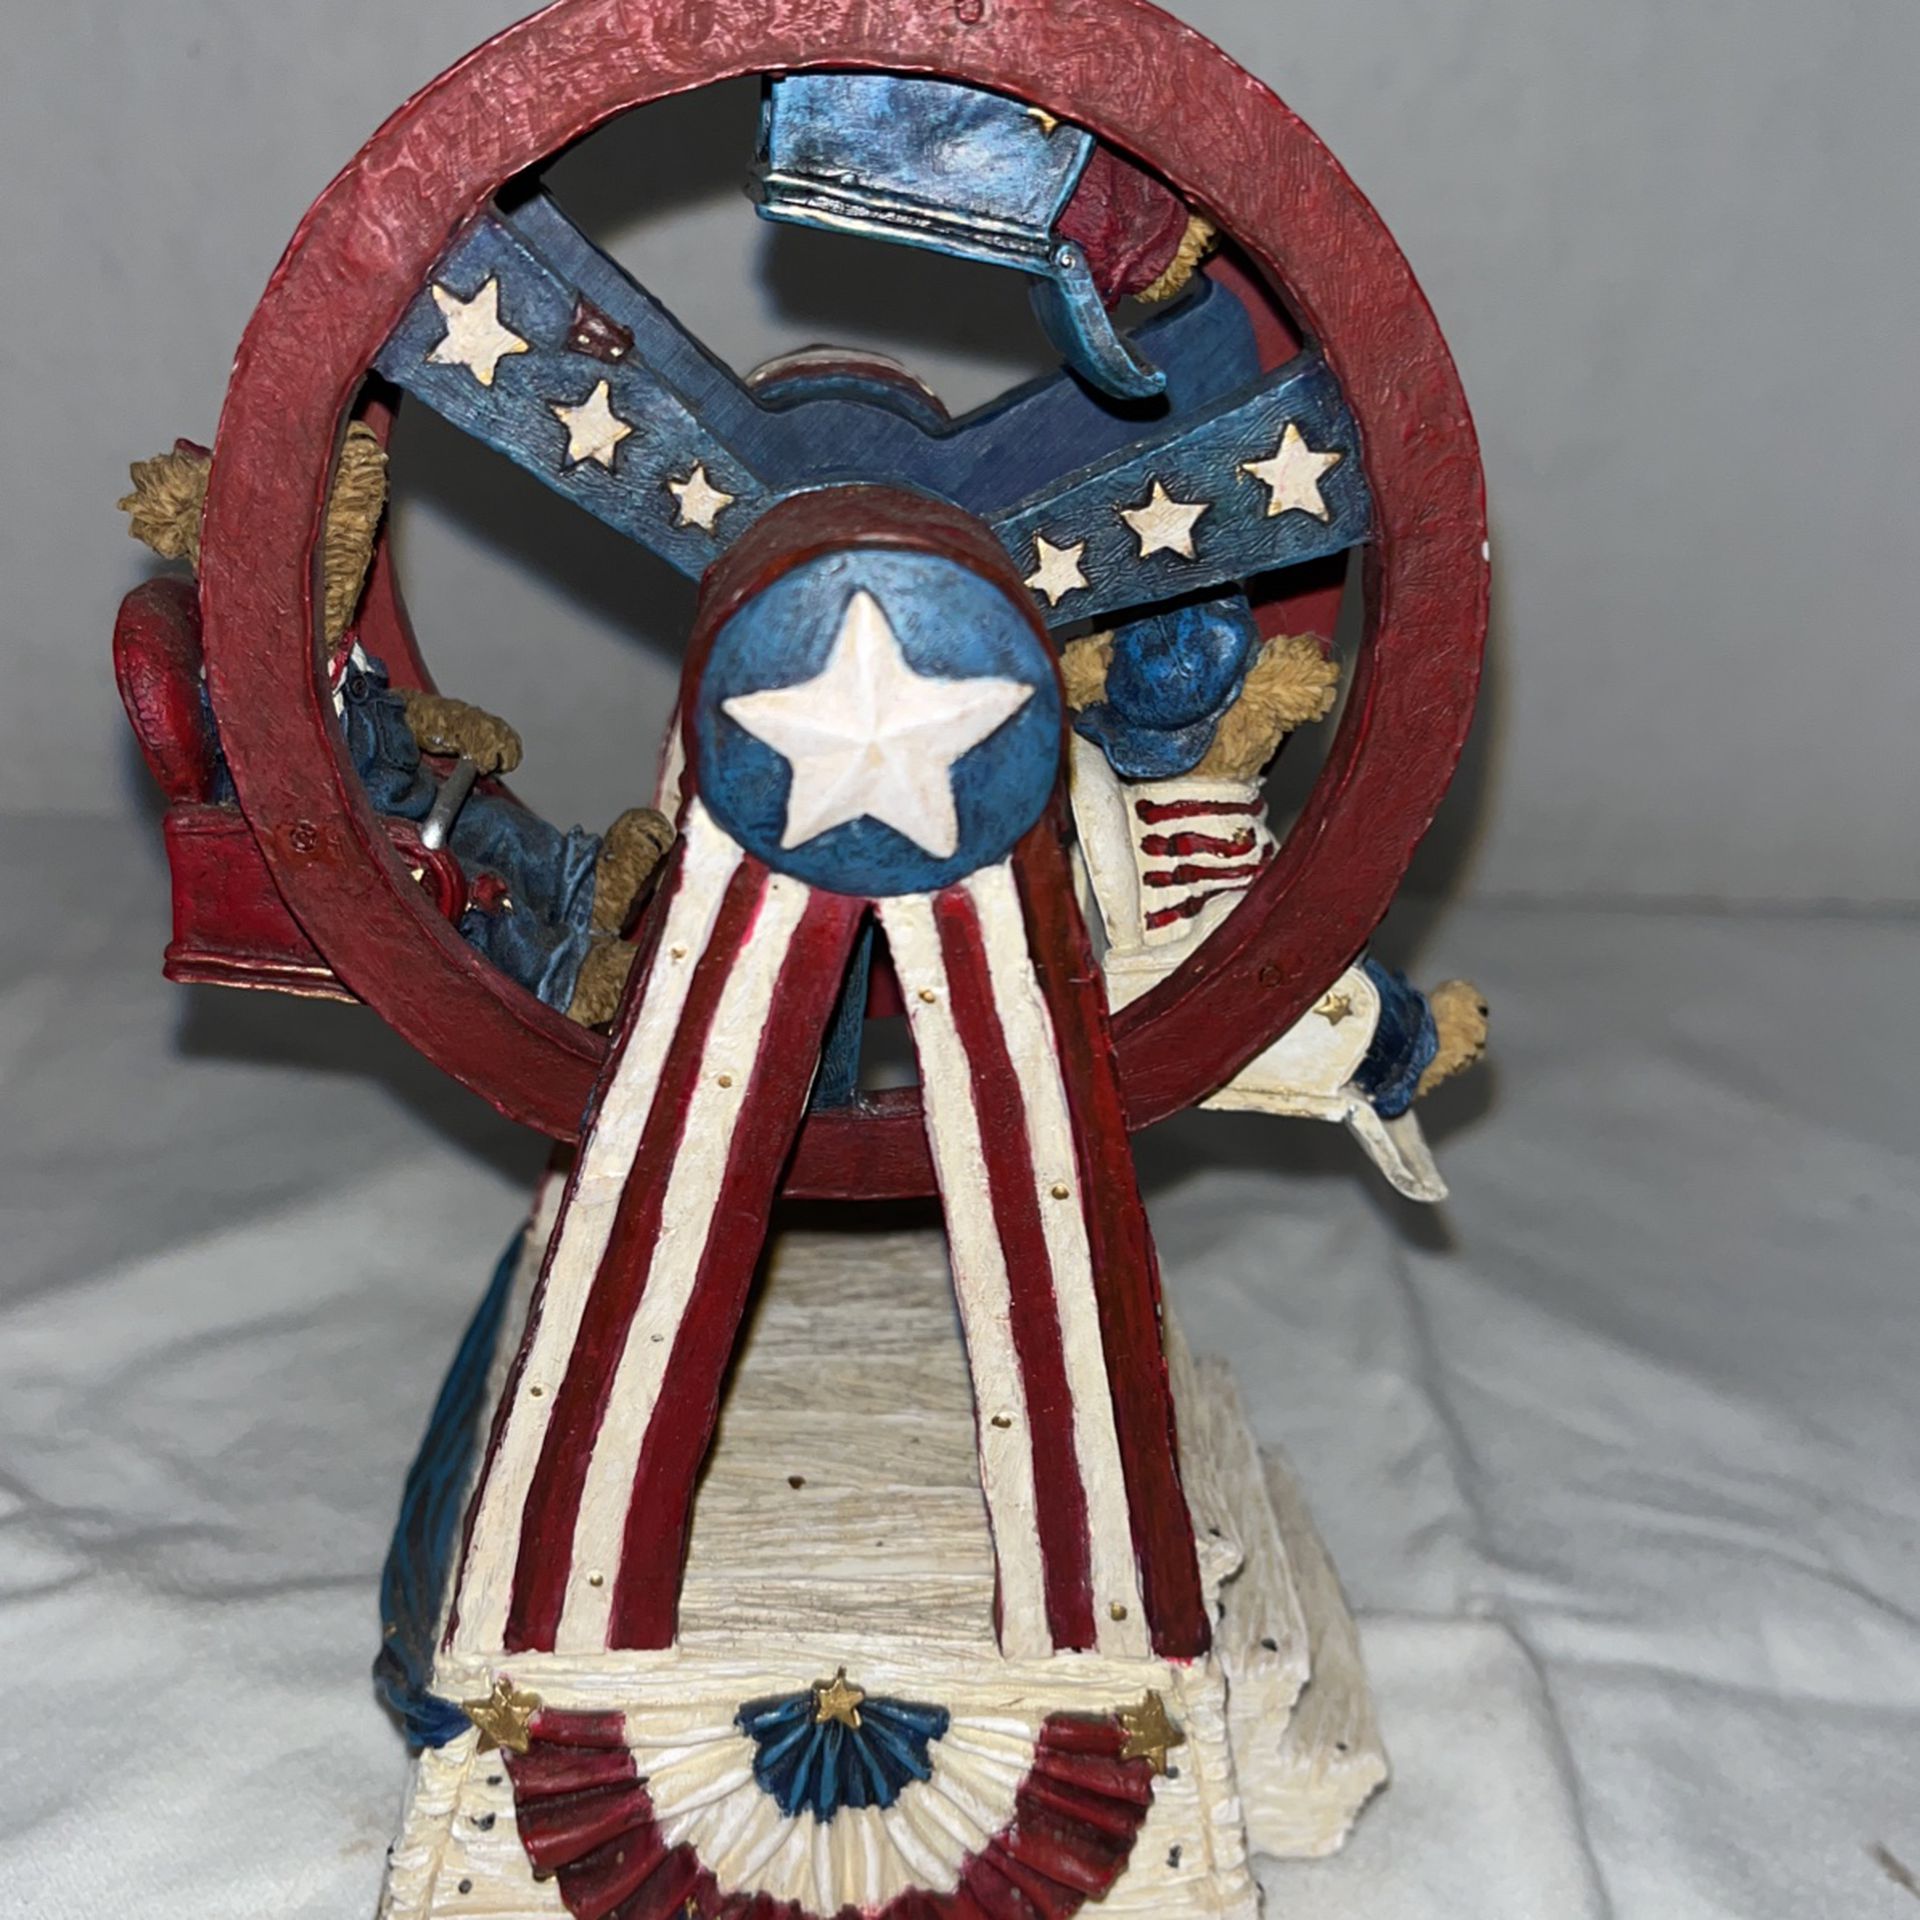 A Patriotic Teddy Bear Music Box “America The Beautifl